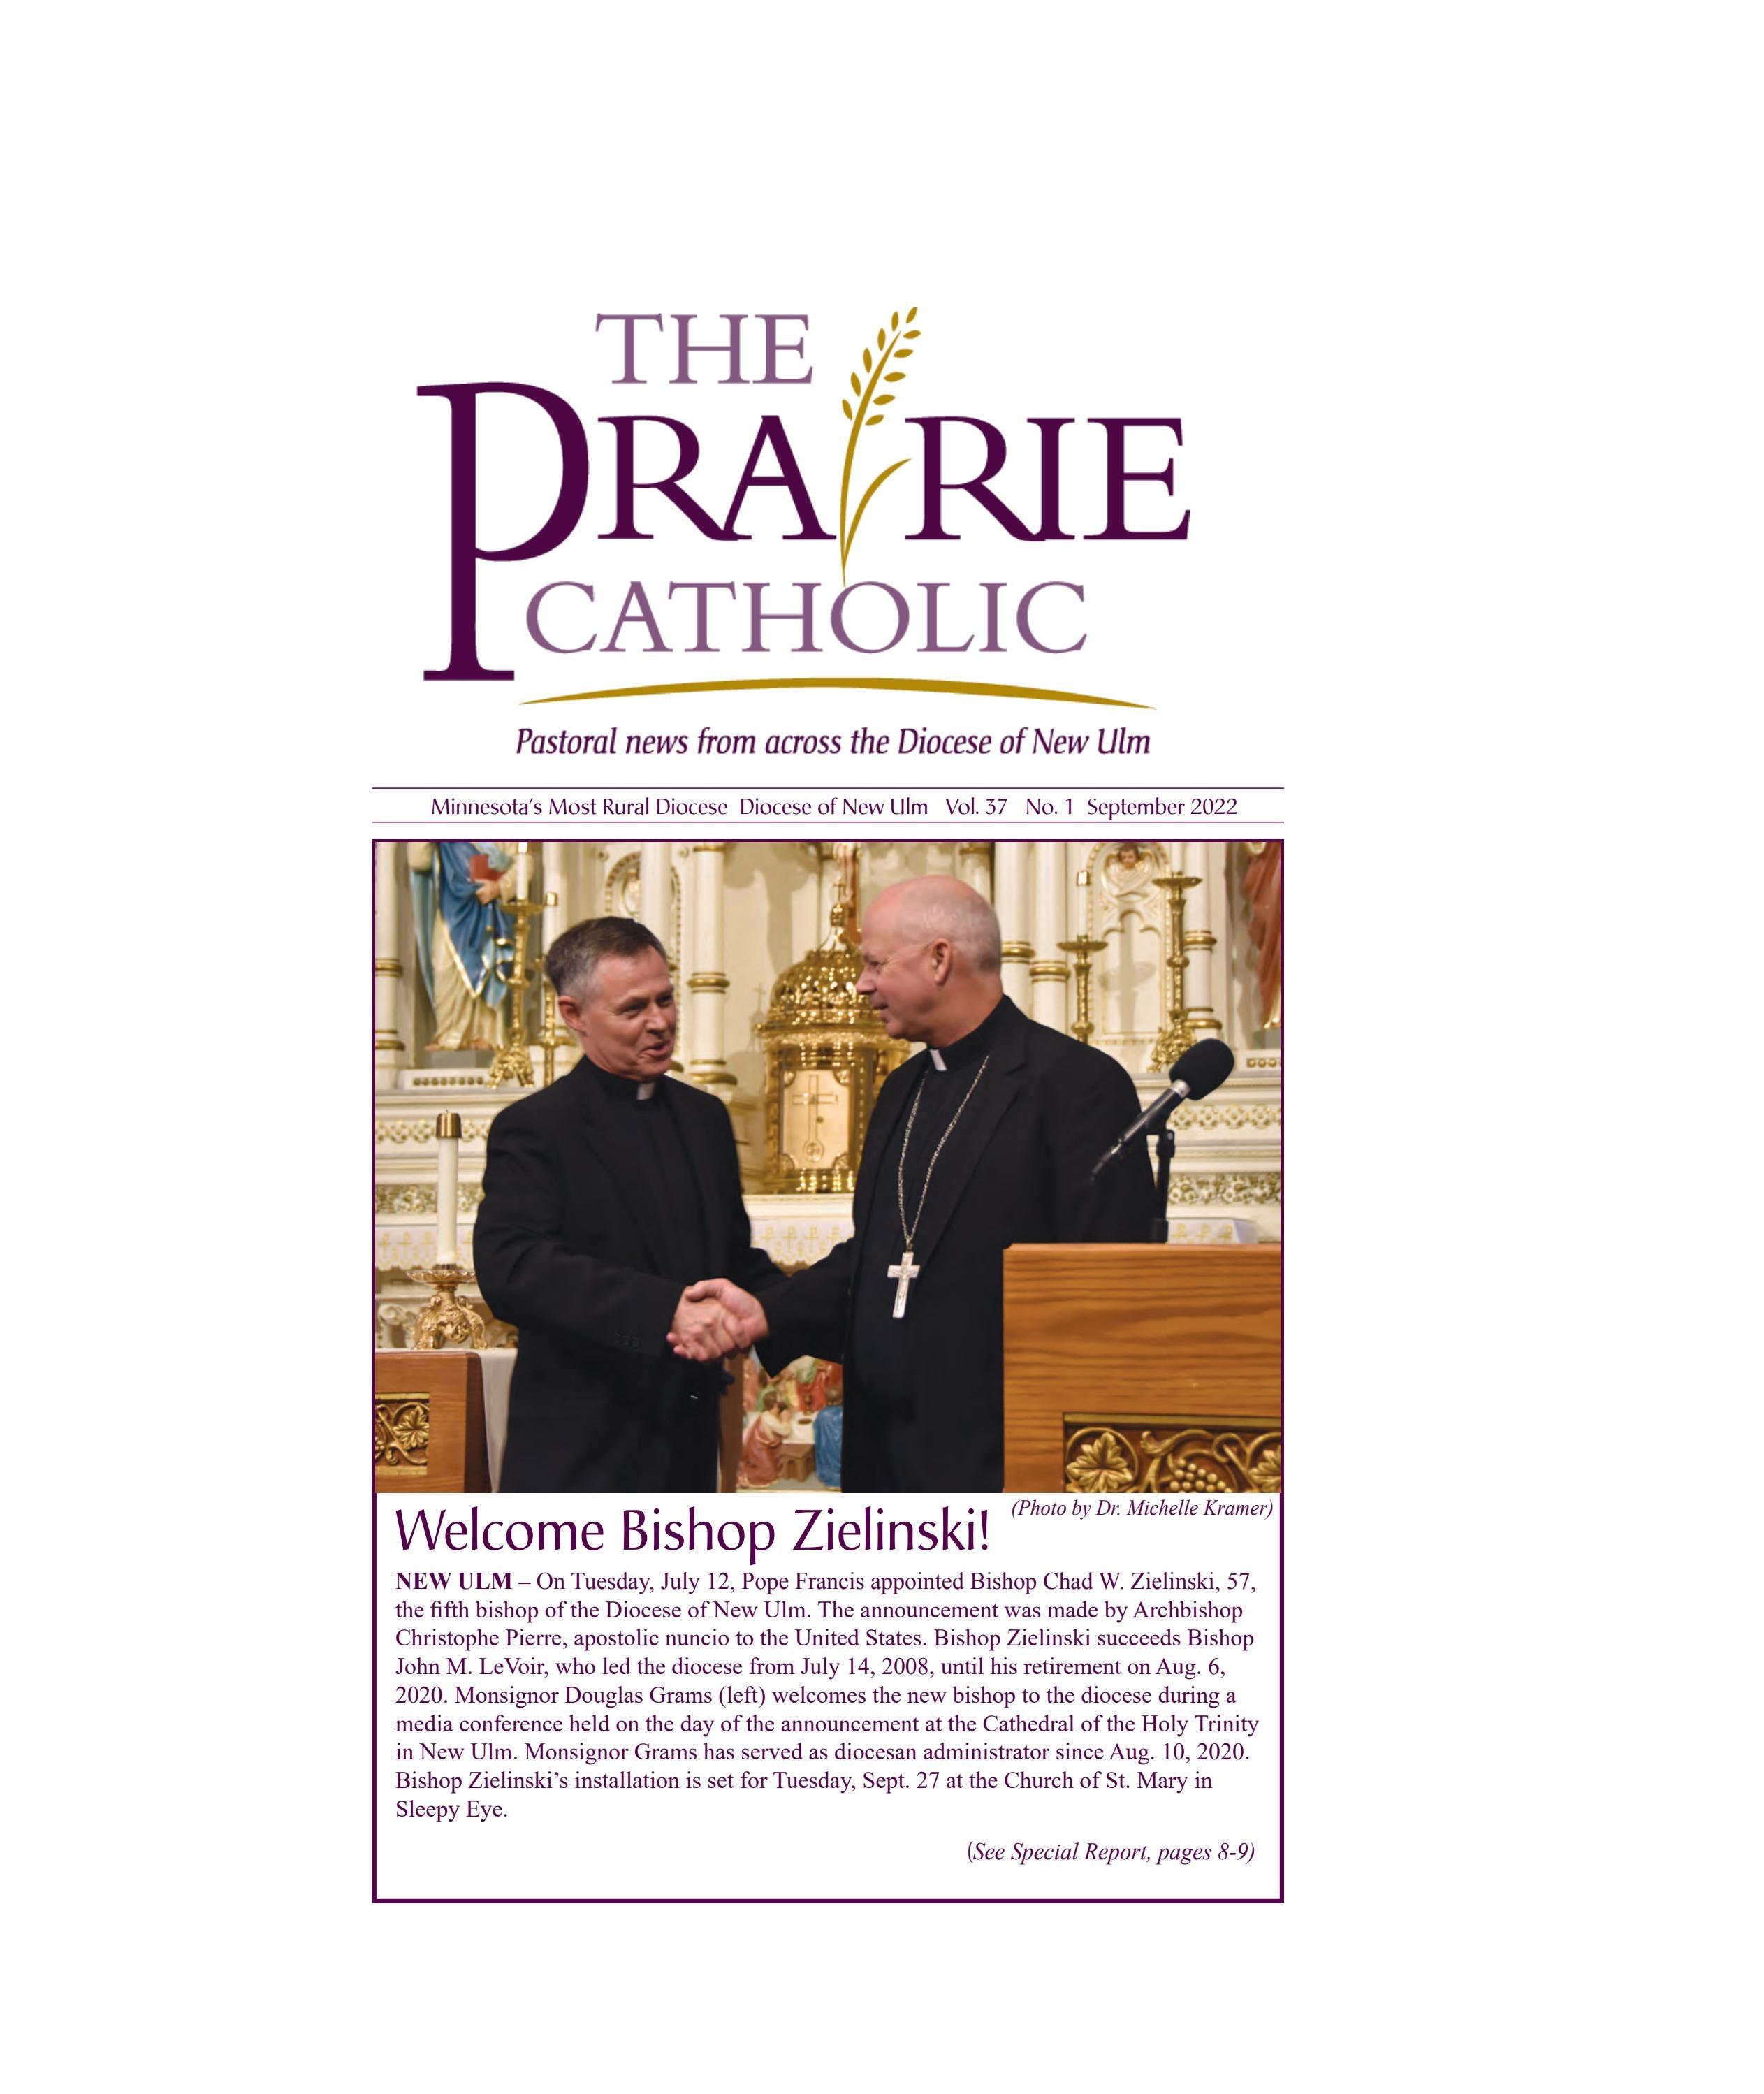 The Prairie Catholic - September 2022 by c. clancy - Issuu